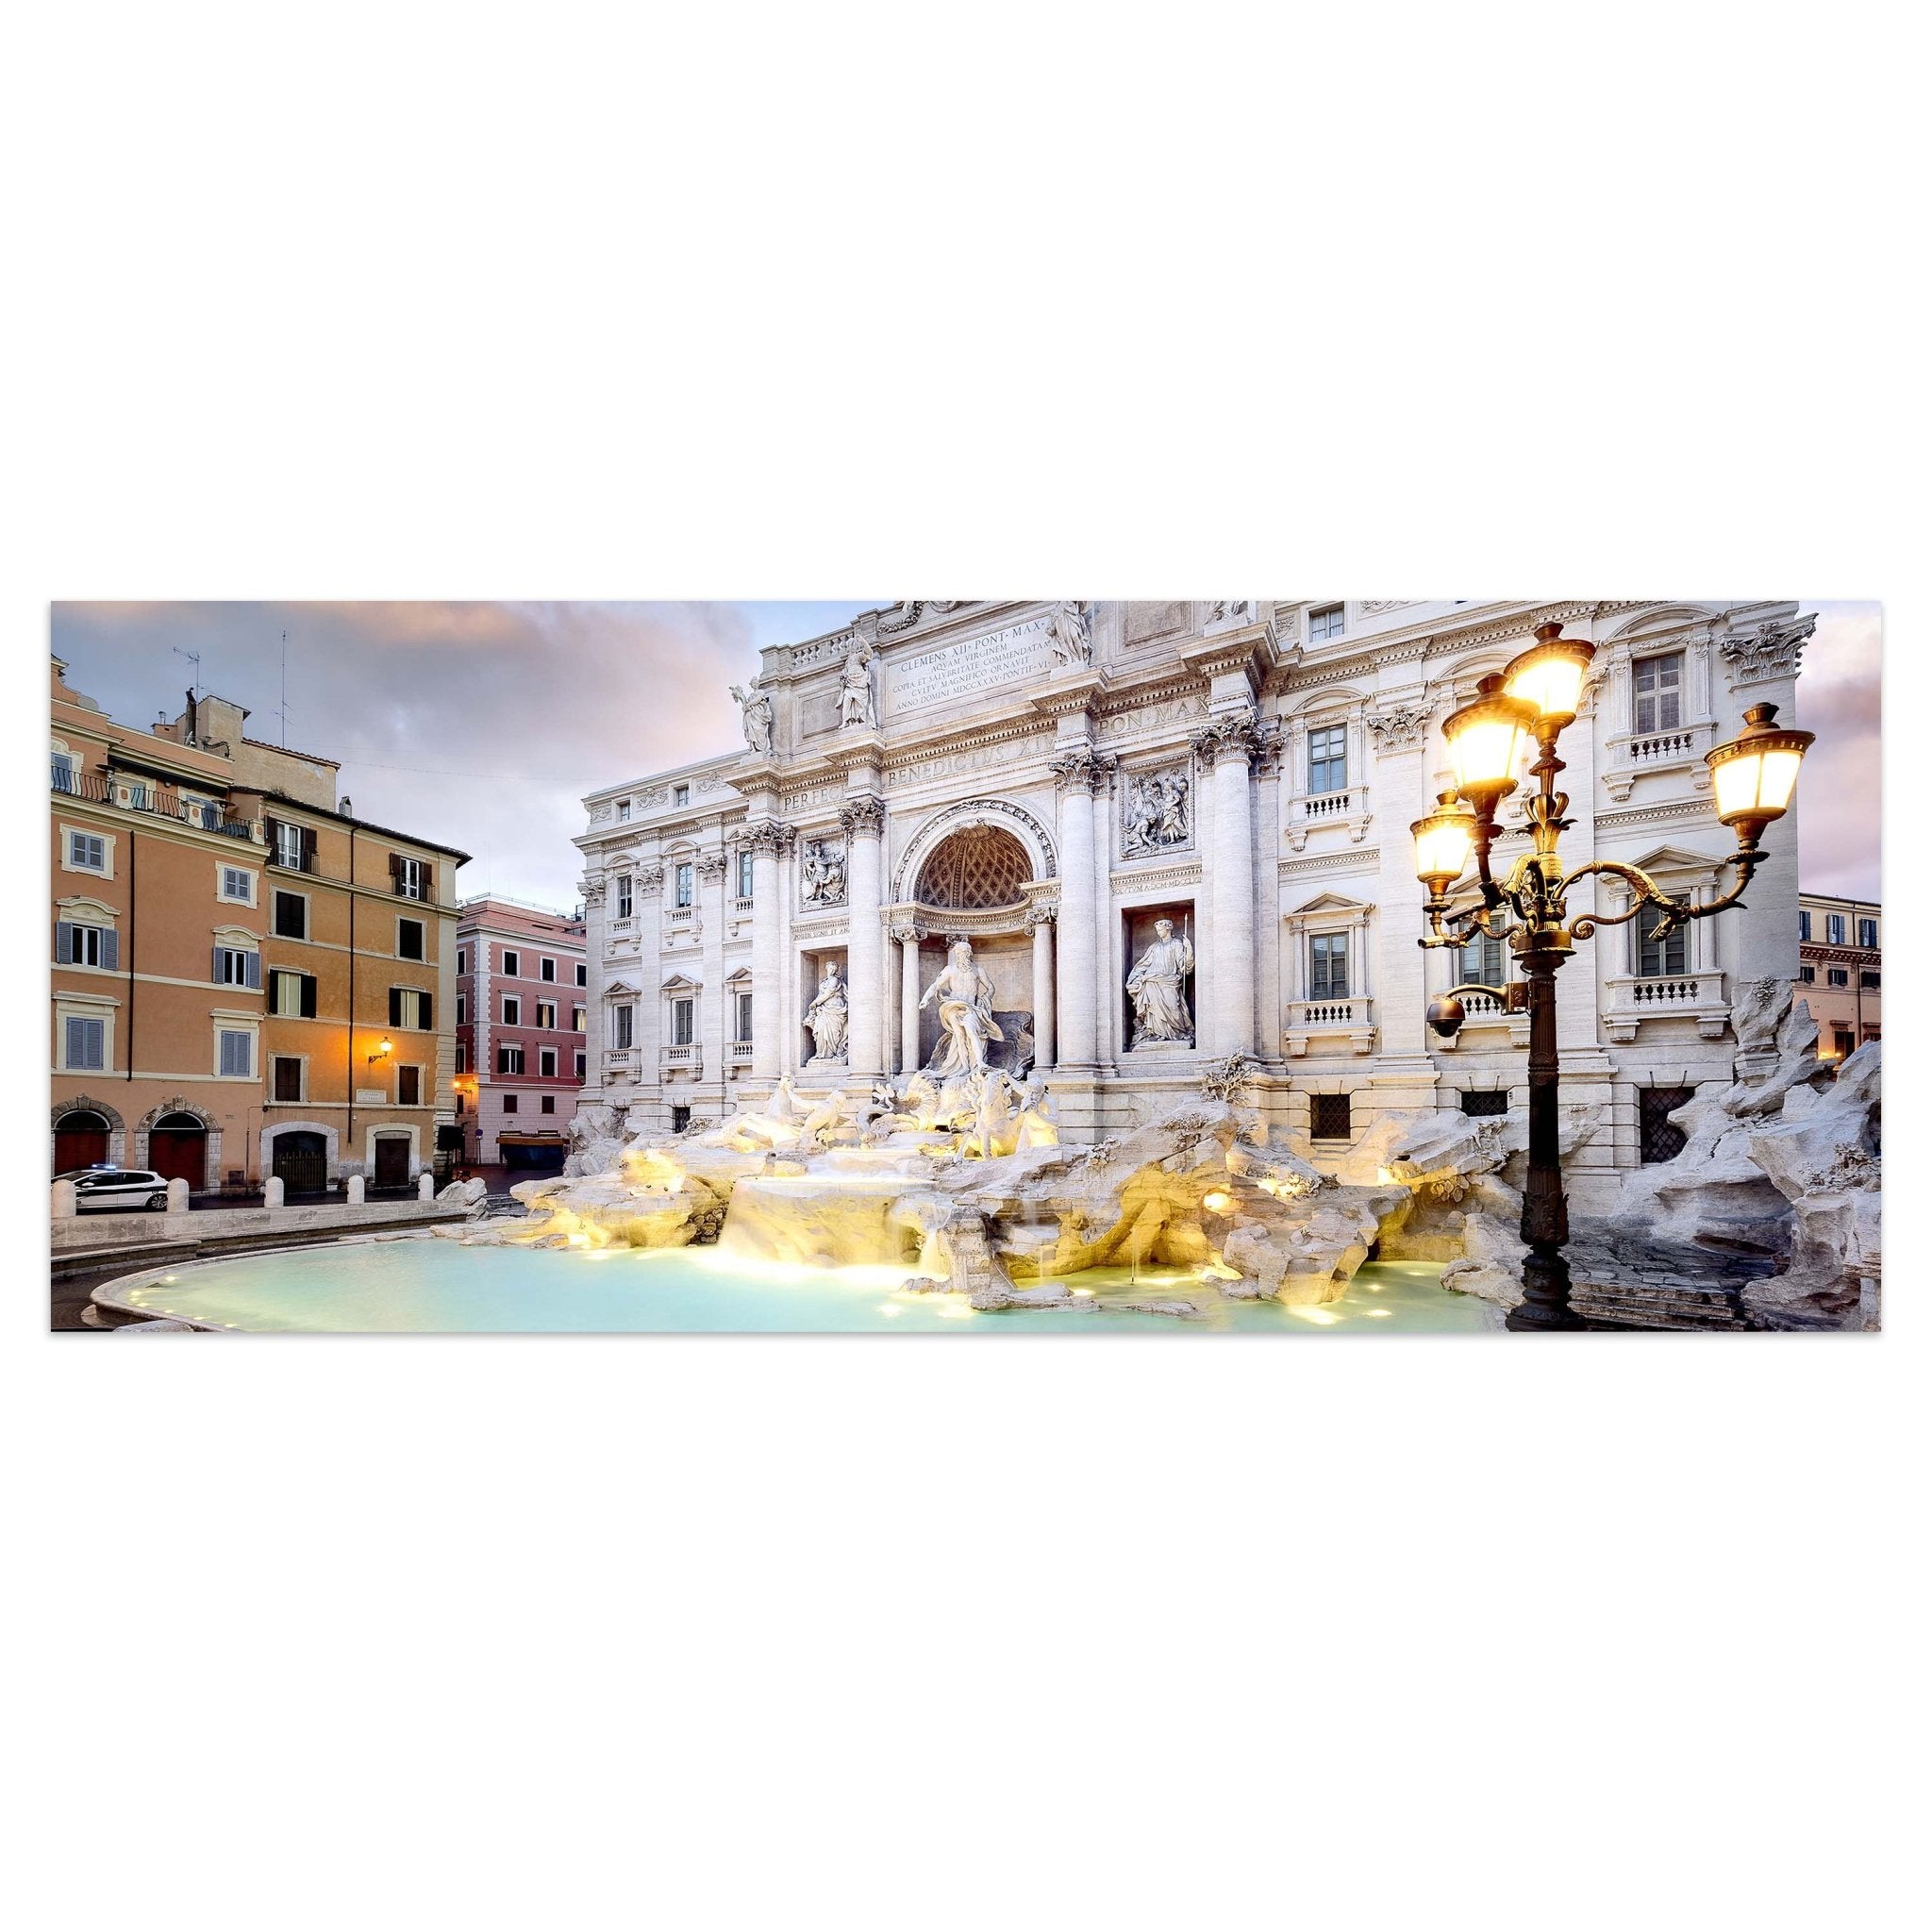 Leinwandbild Trevi-Brunnen, Rom M1024 kaufen - Bild 1